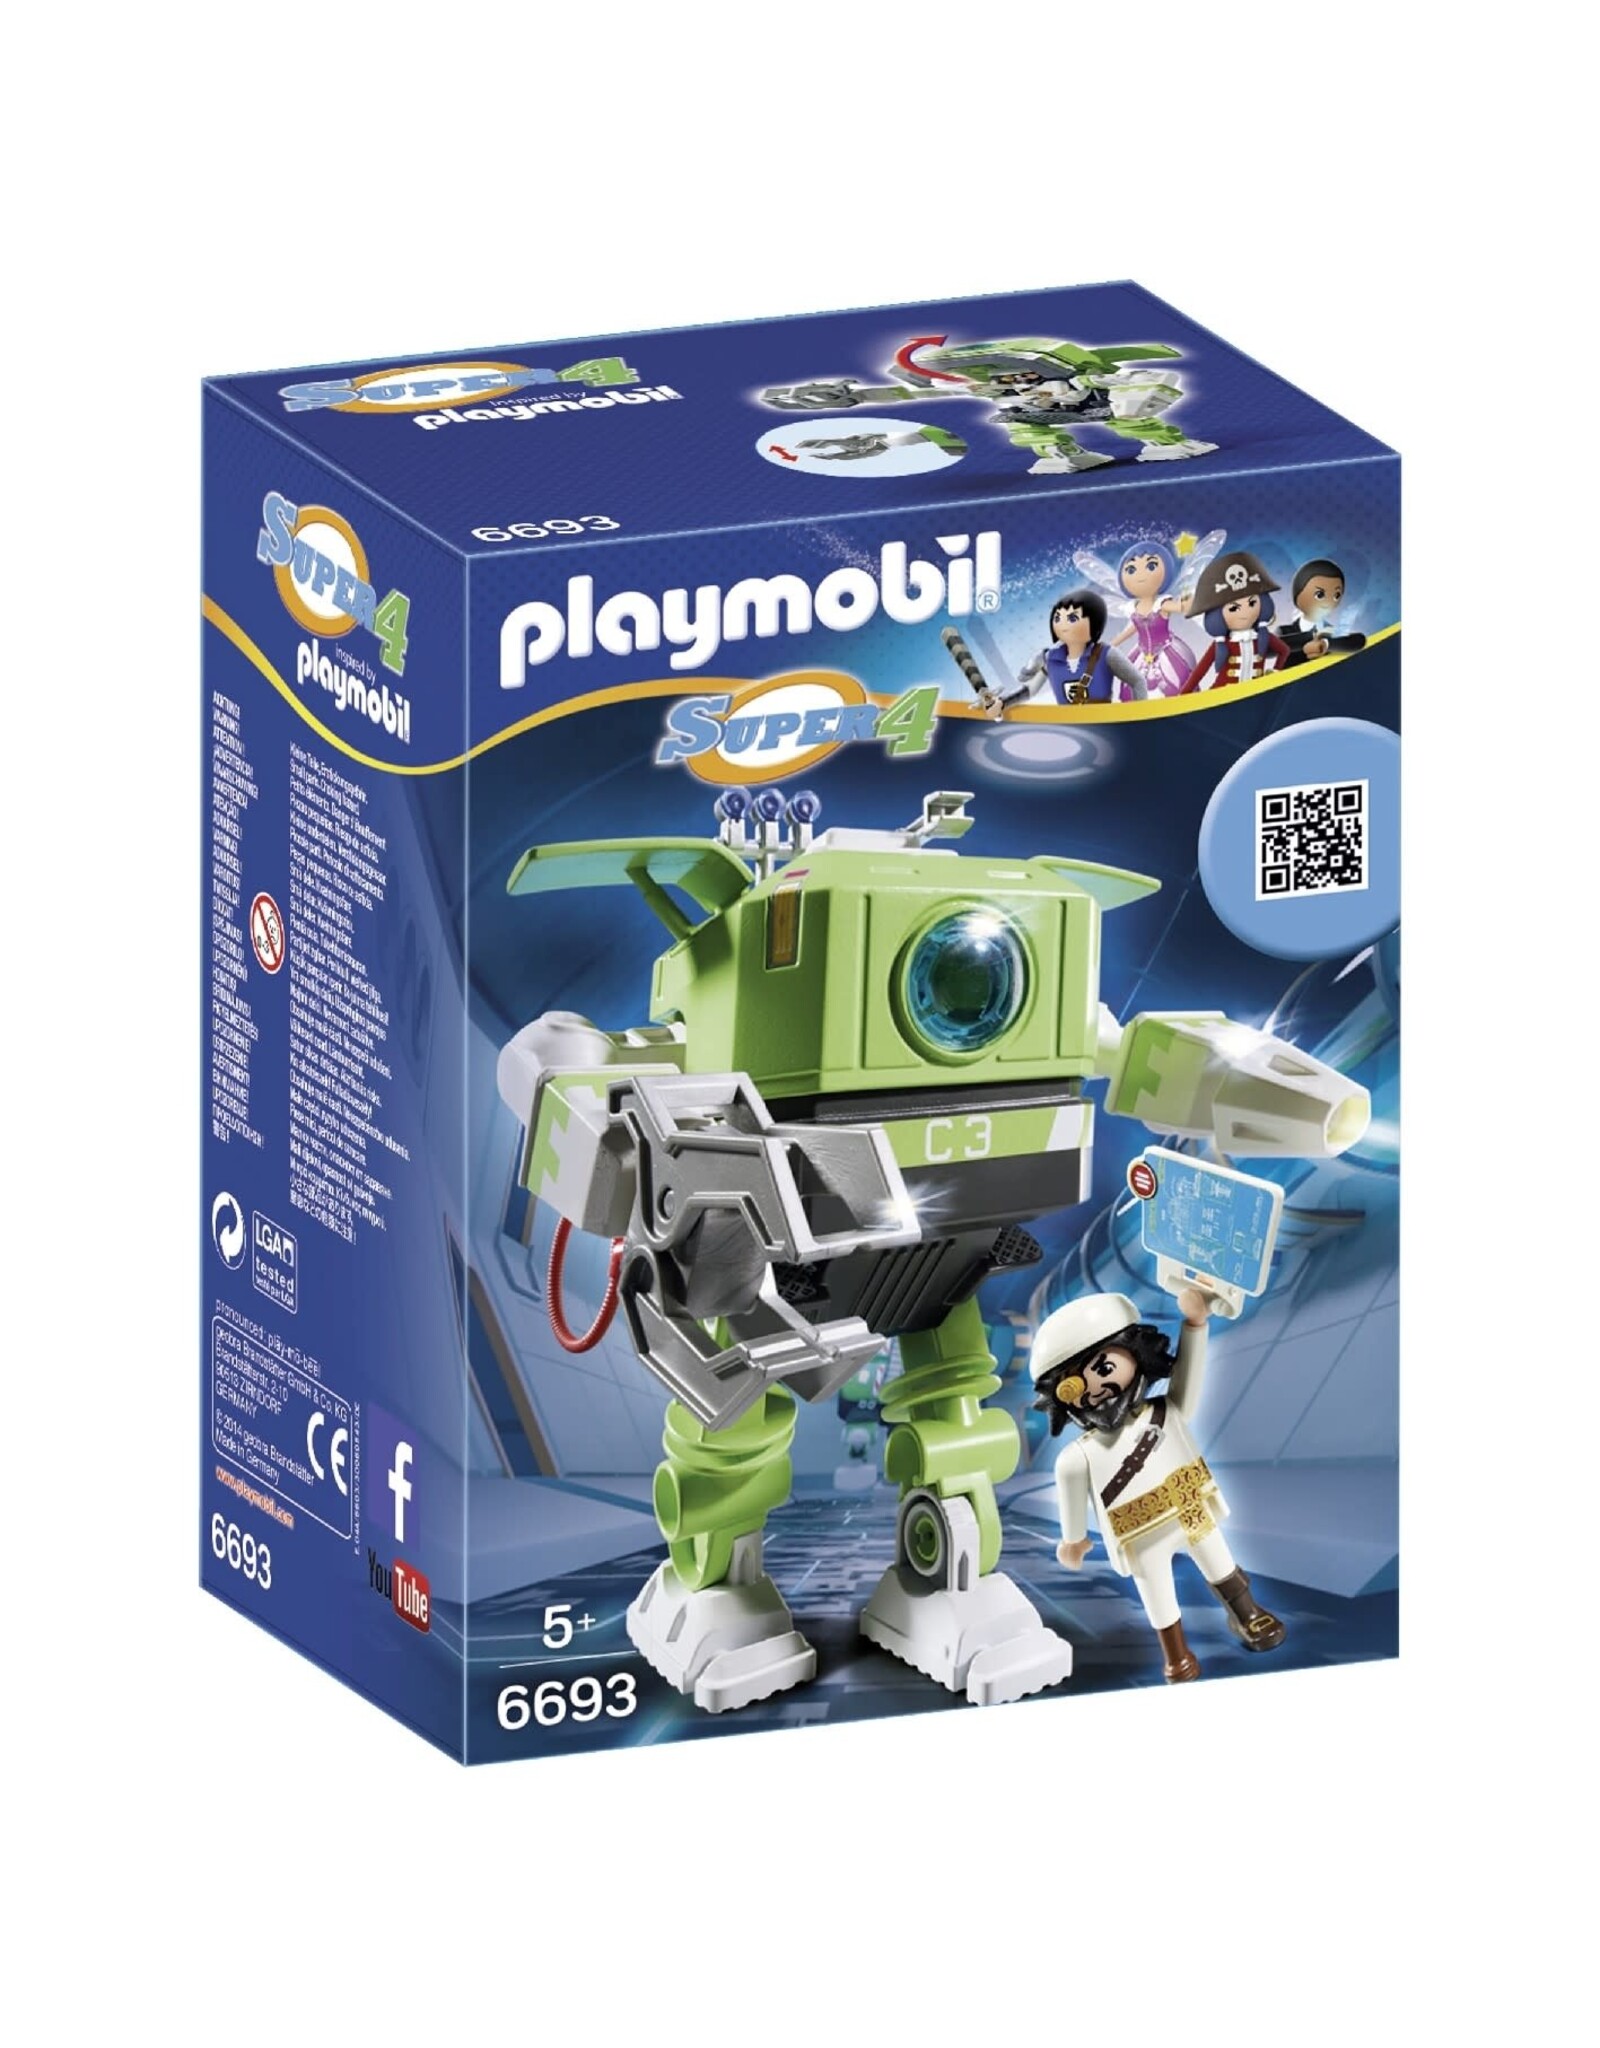 Playmobil Playmobil 6693  Super 4 Cleano-Robot